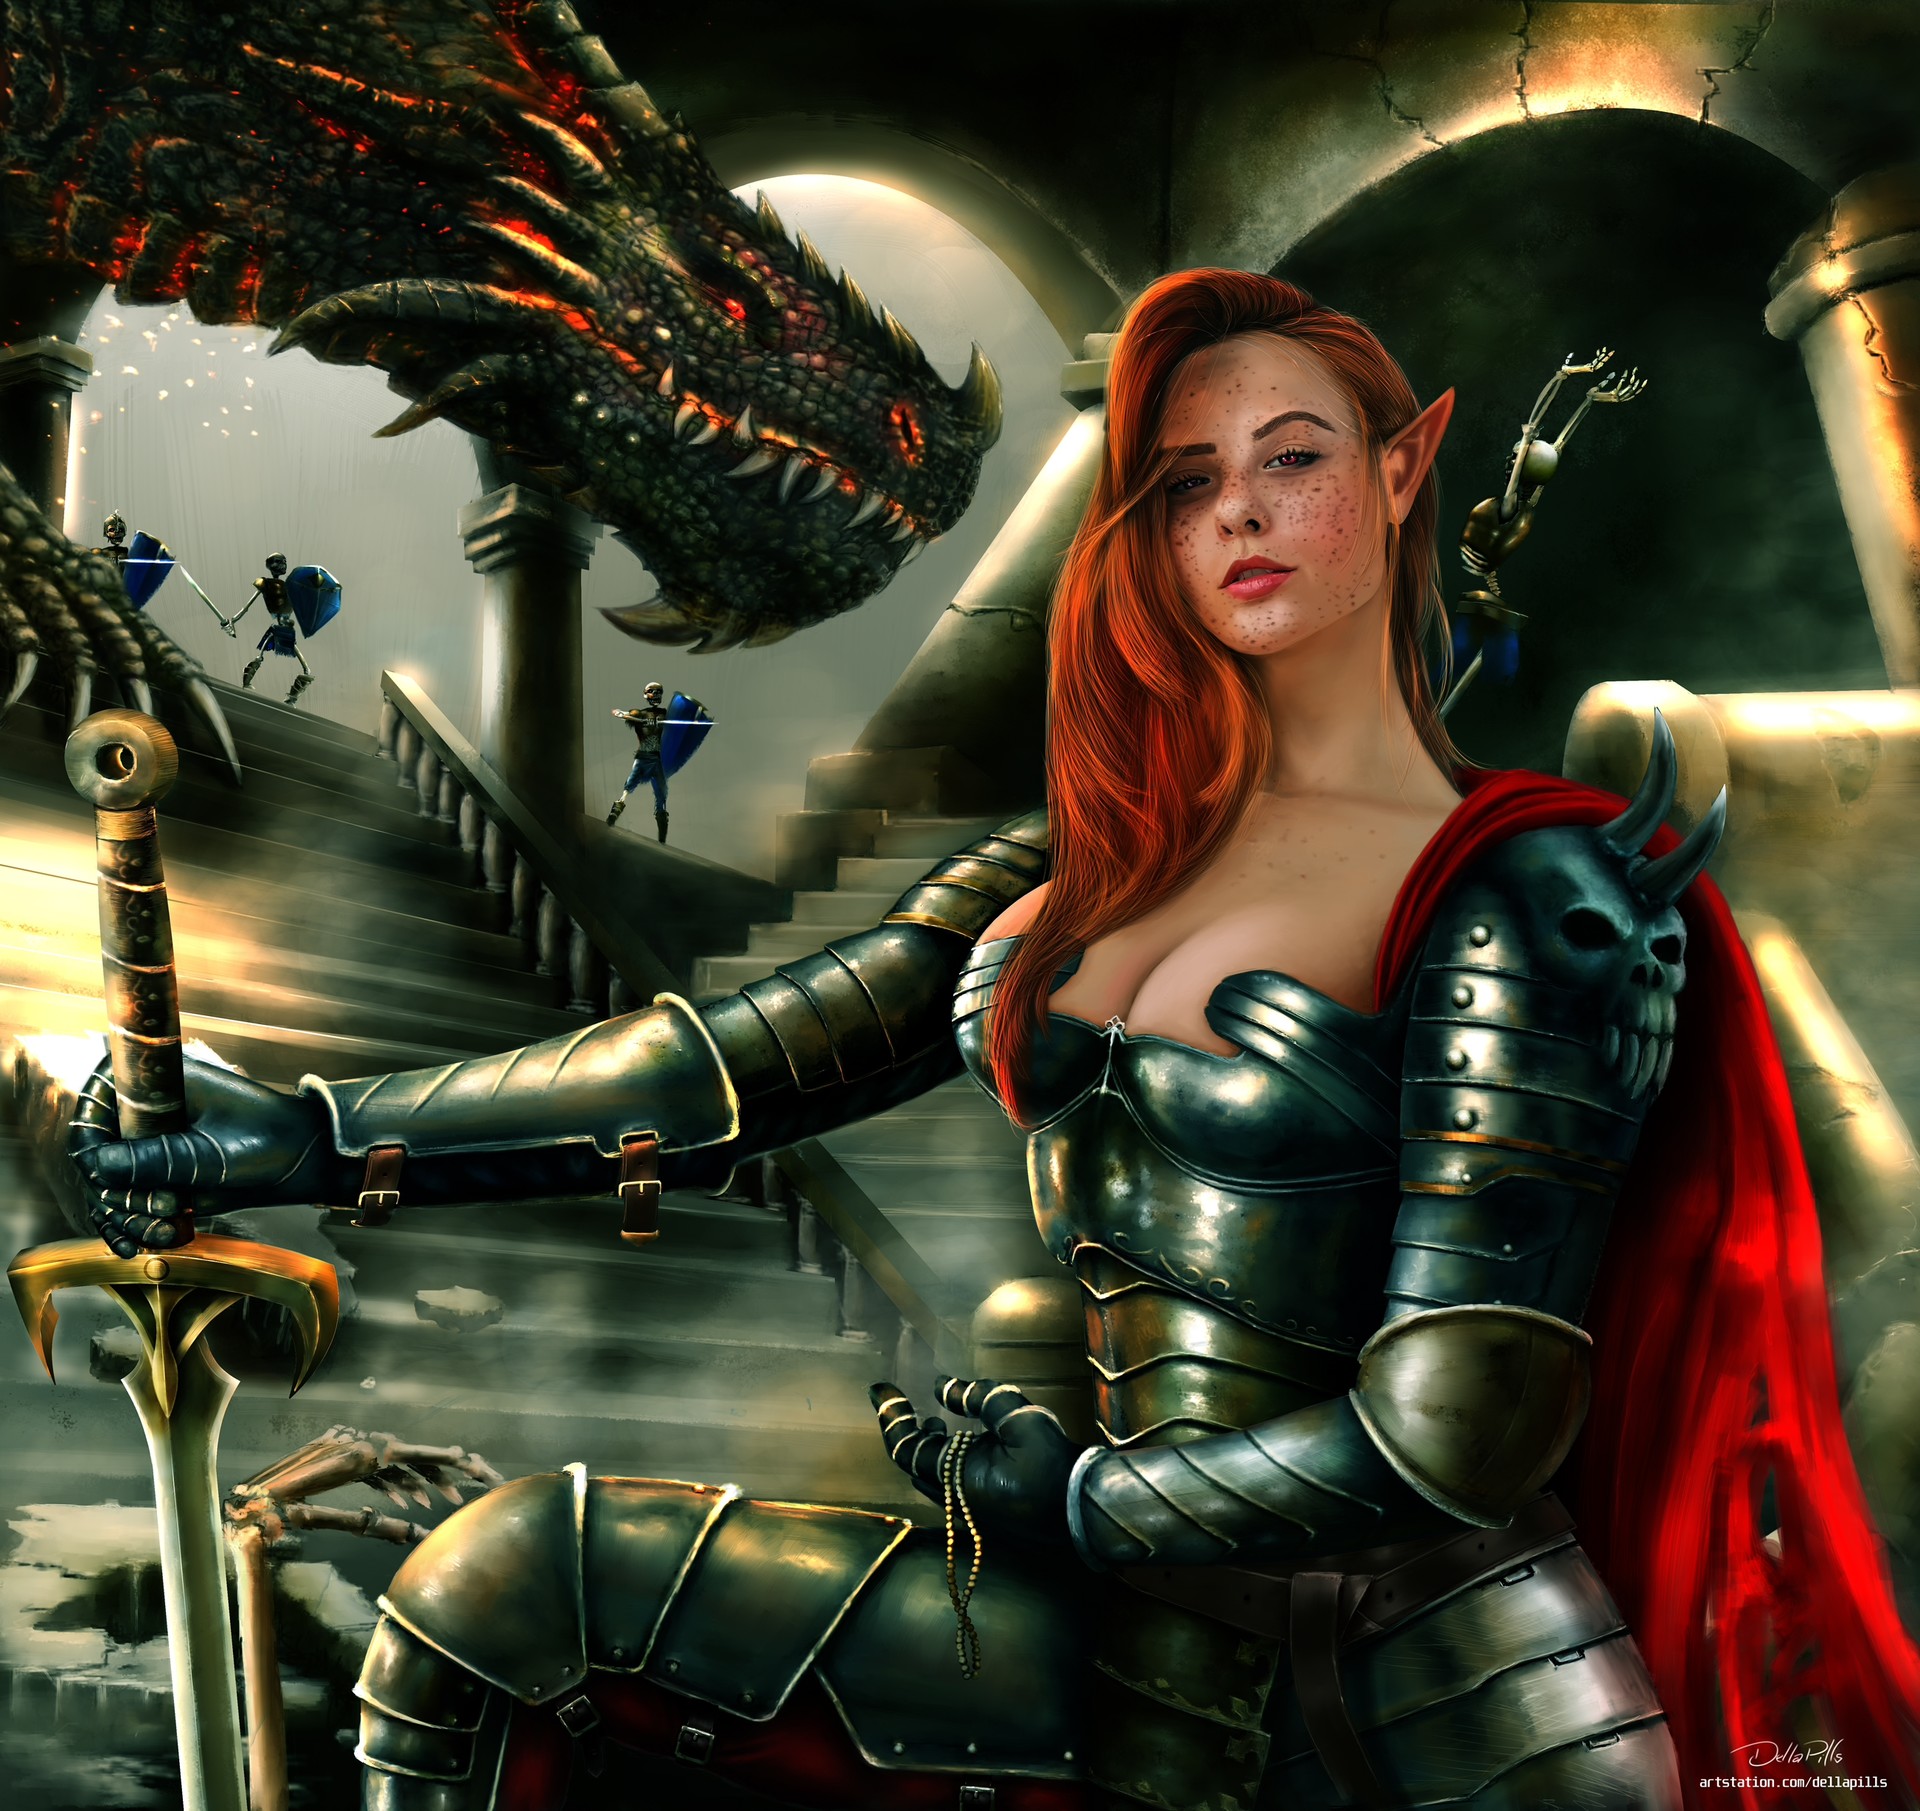 General 1920x1811 DellaPills redhead fantasy girl fantasy art boobs dragon creature sword elves armor